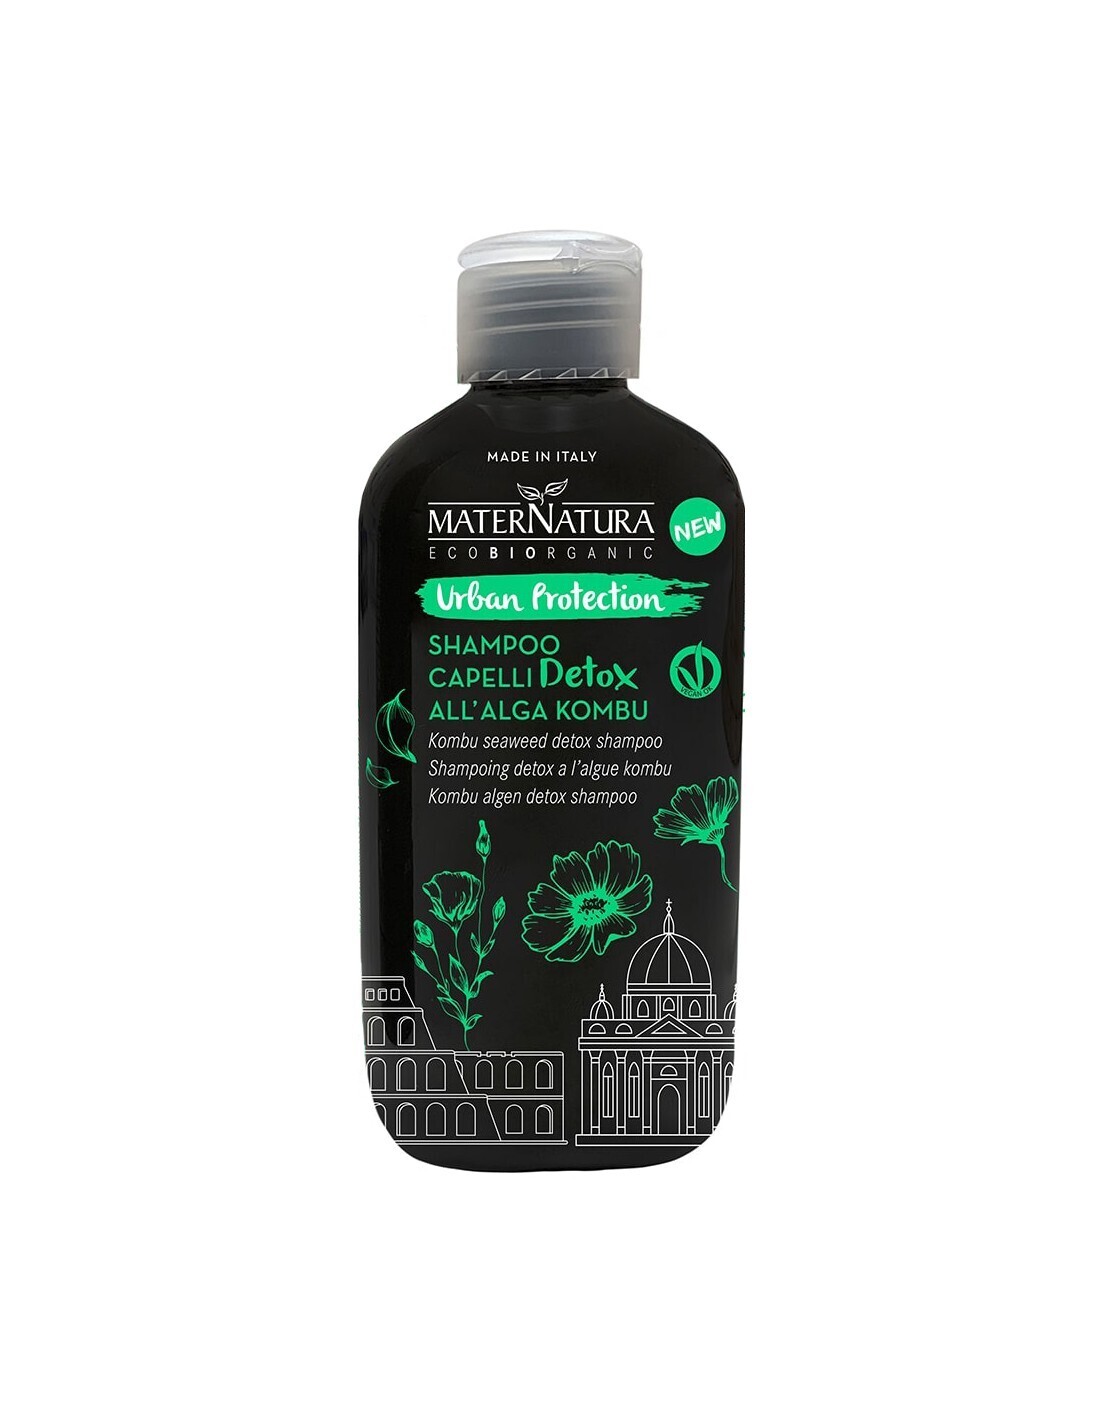 Shampoo Capelli Detox all’Alga Kombu –Urban Protection – MaterNatura